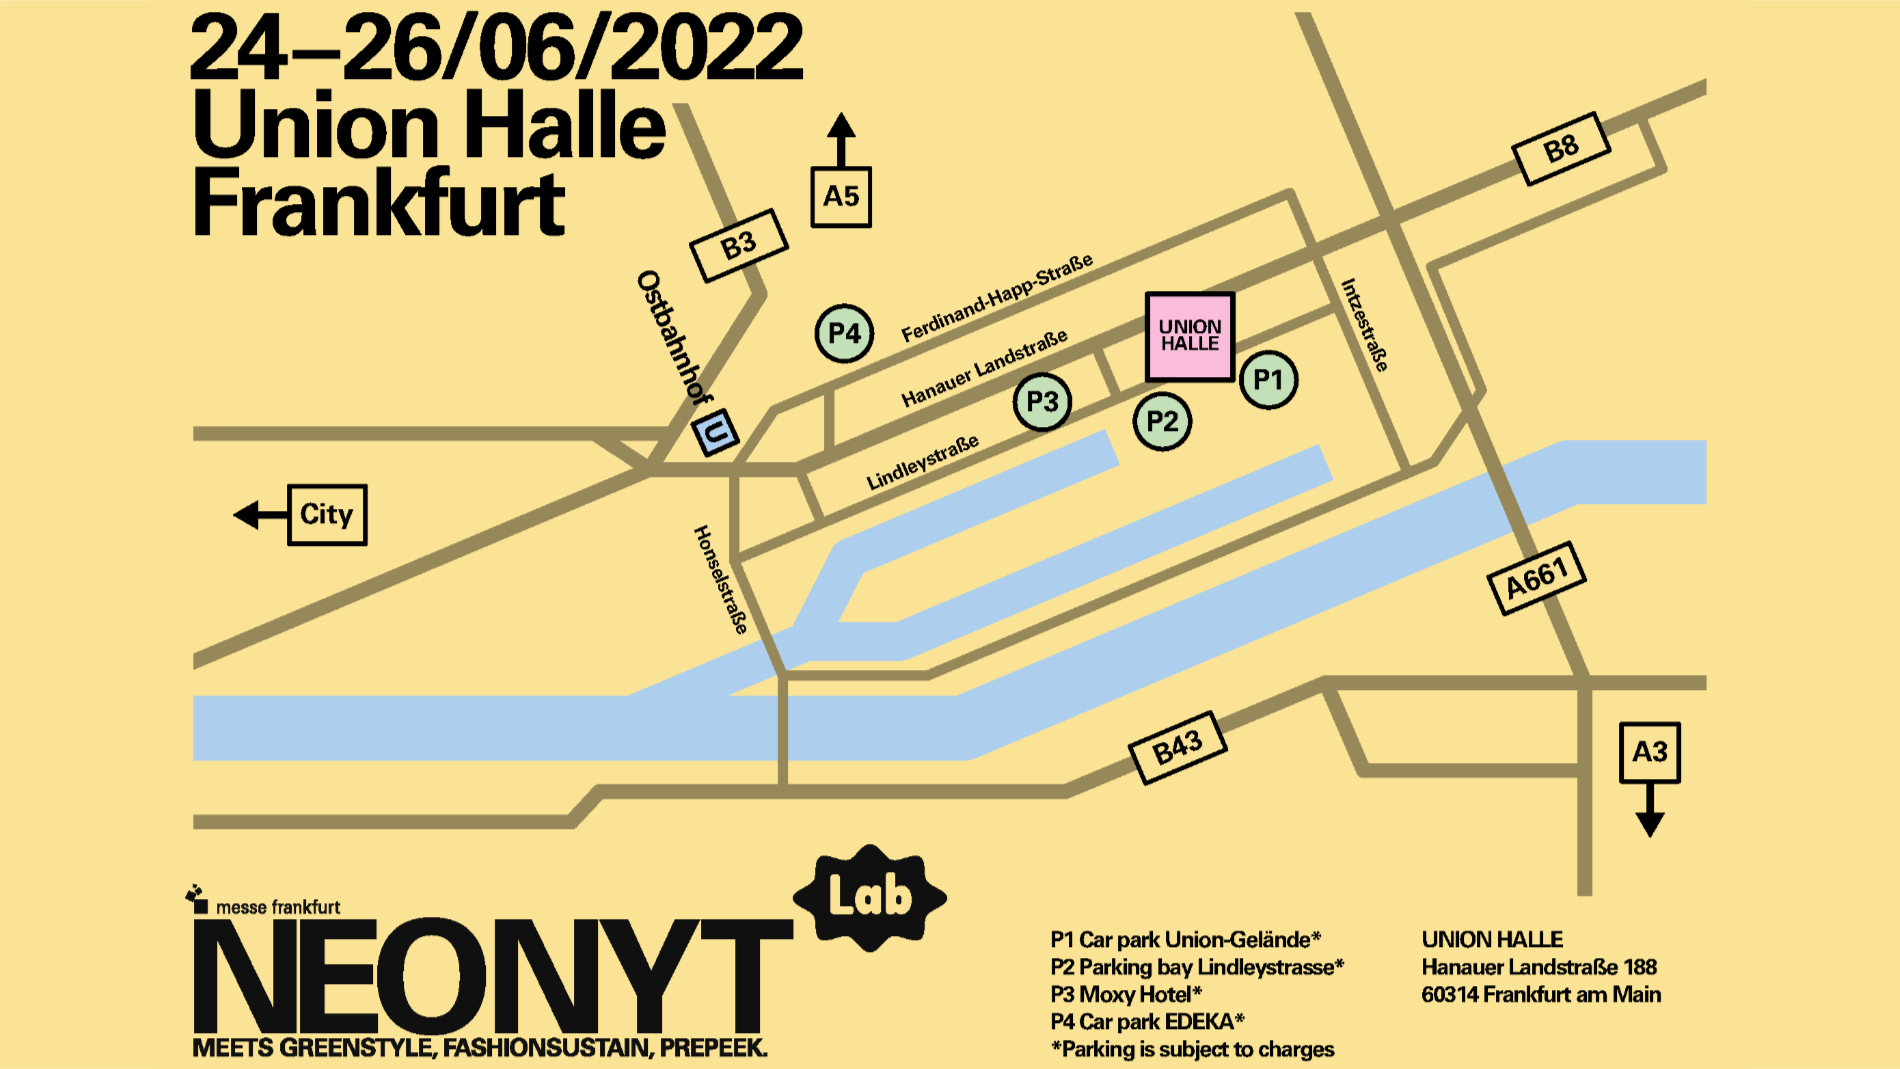 Neonyt Lab 2022: Site plan, Union Halle, Frankfurt am Main